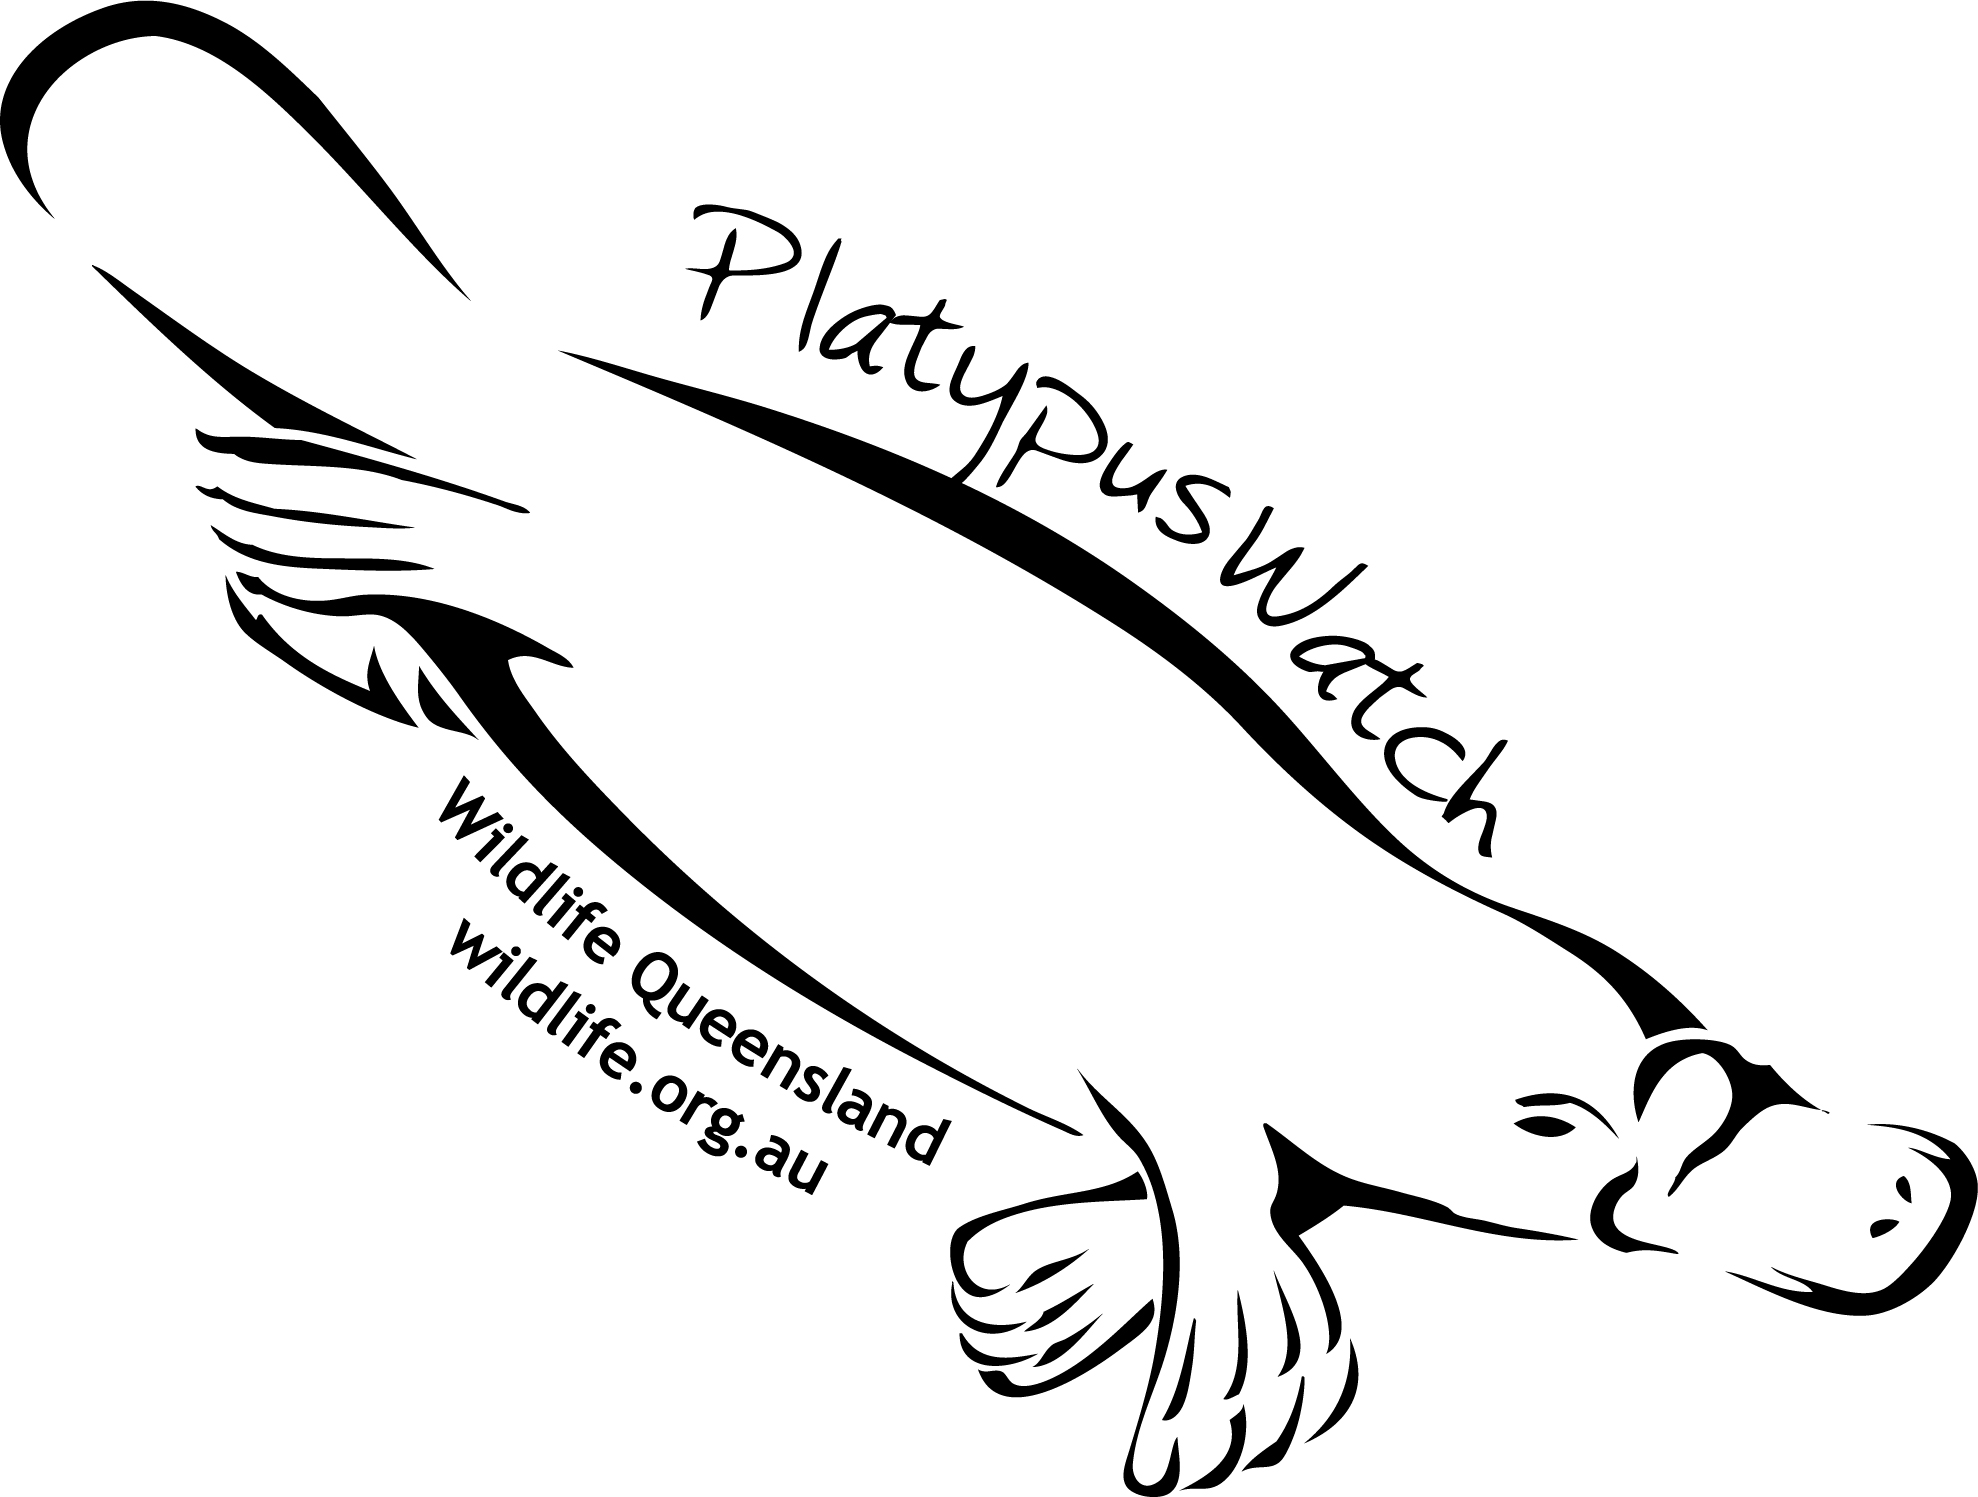 PlatypusWatch Logo